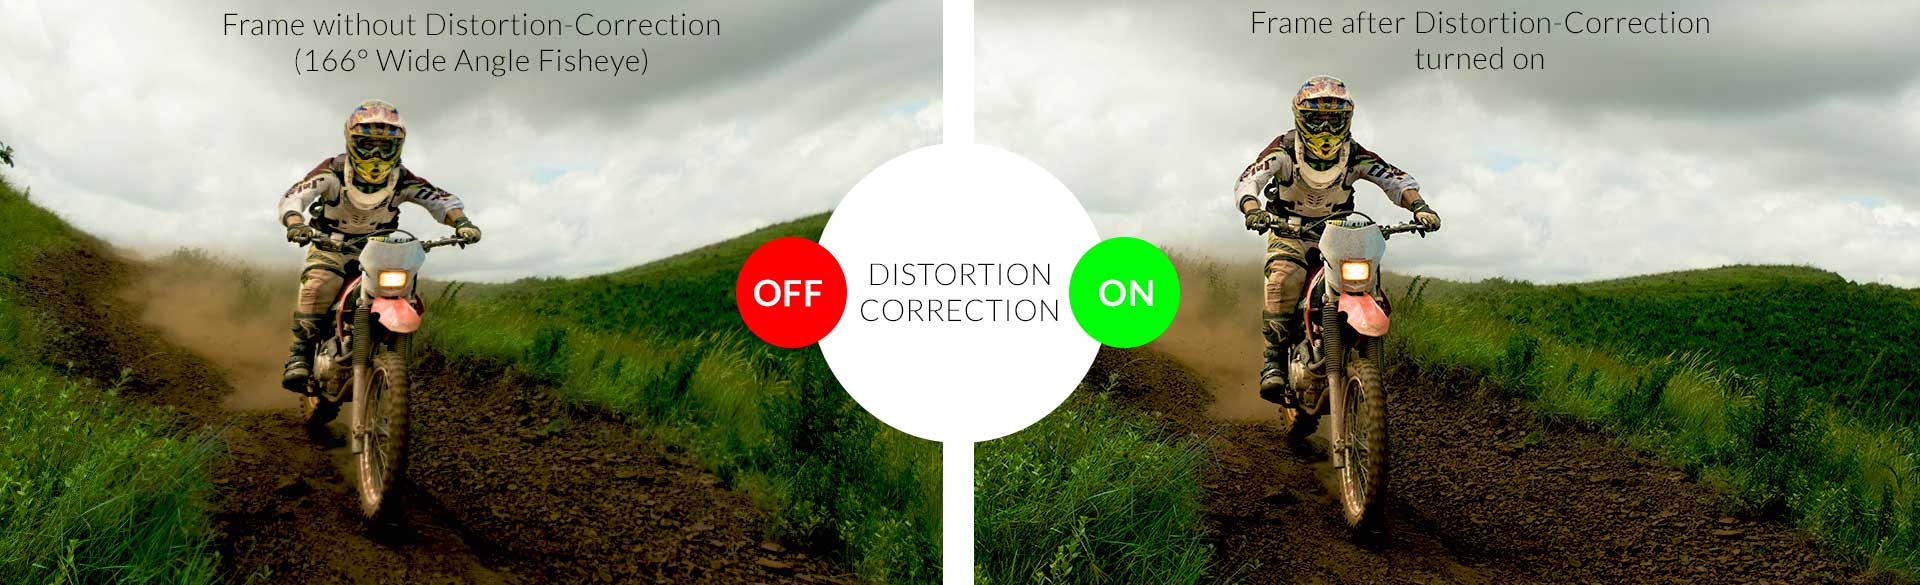 Distortion-Correction